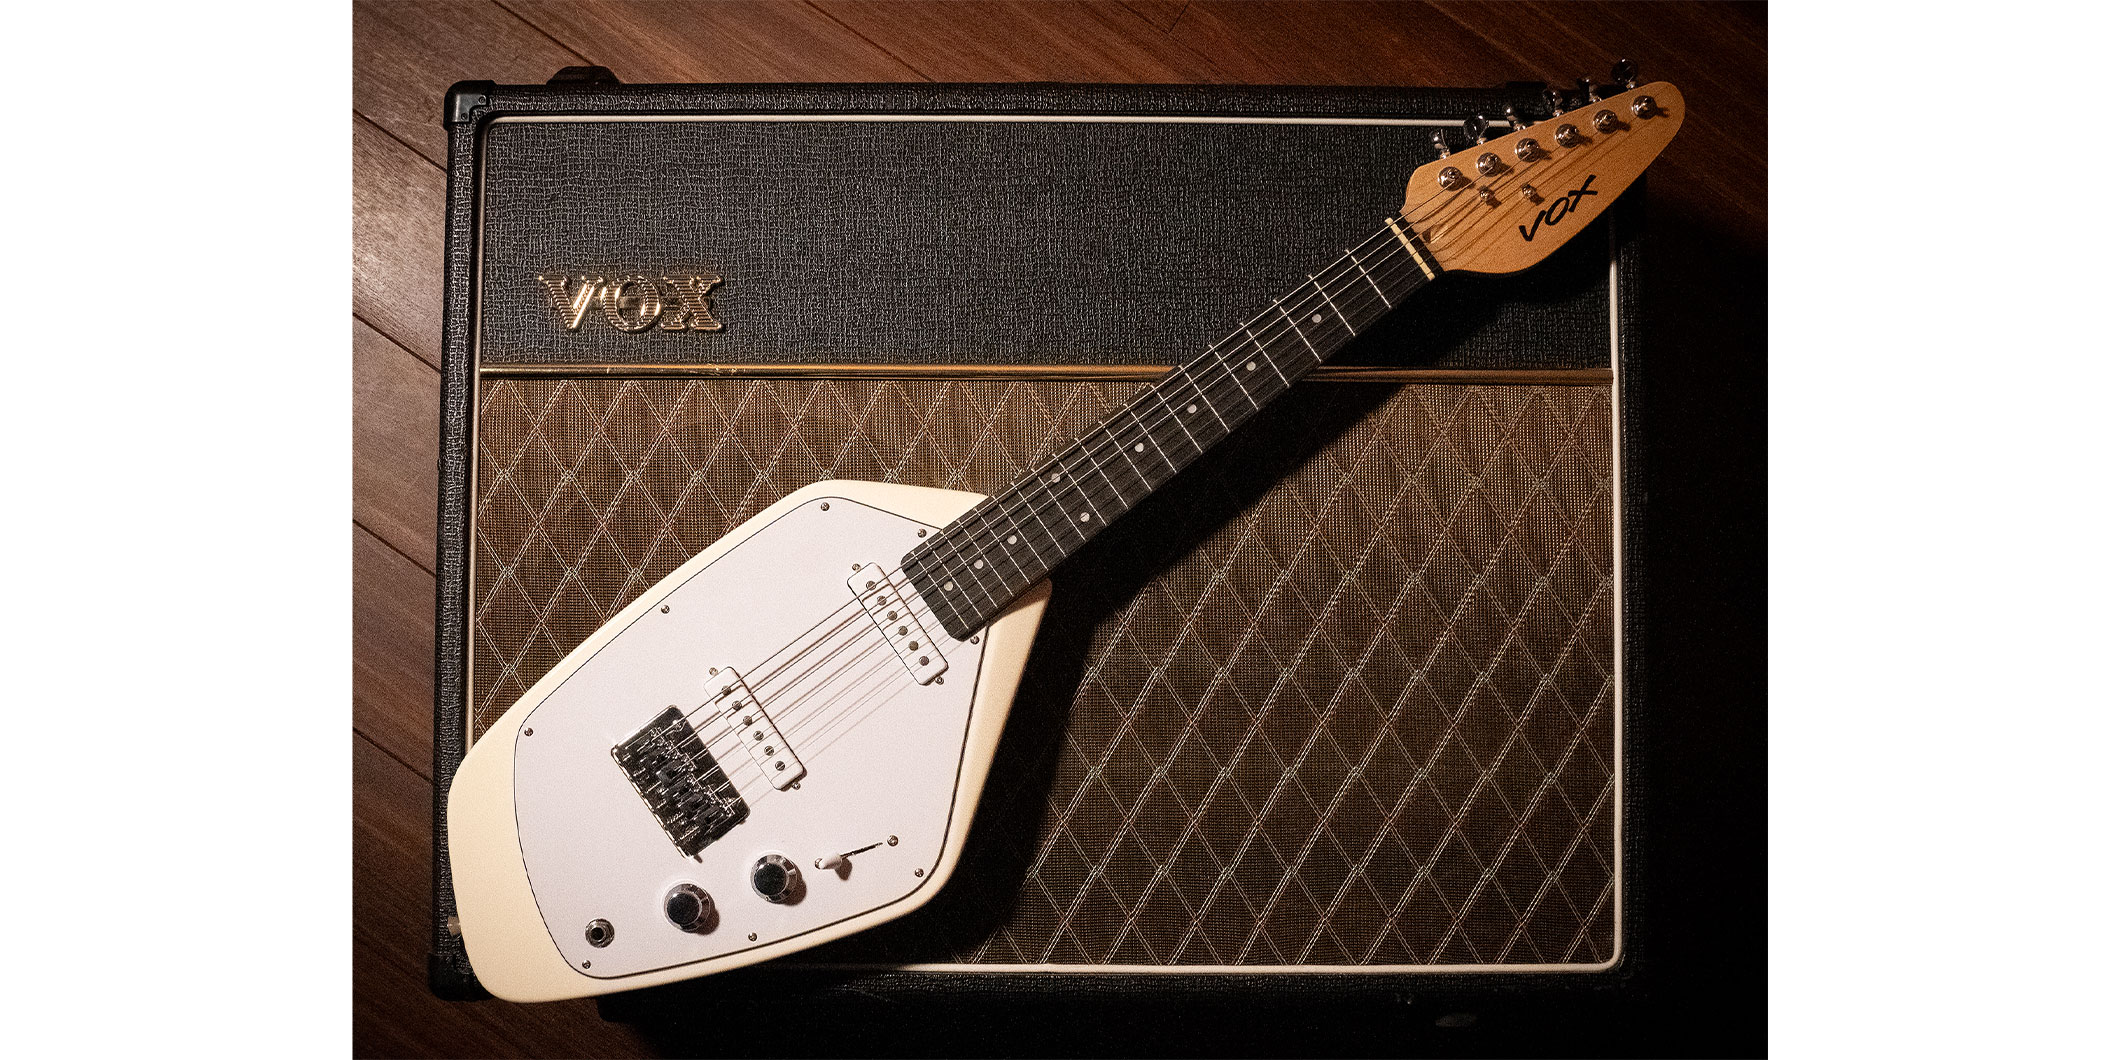 VOXより、ファントム・シェイプのミニ・ギター“Mark V mini”が発売